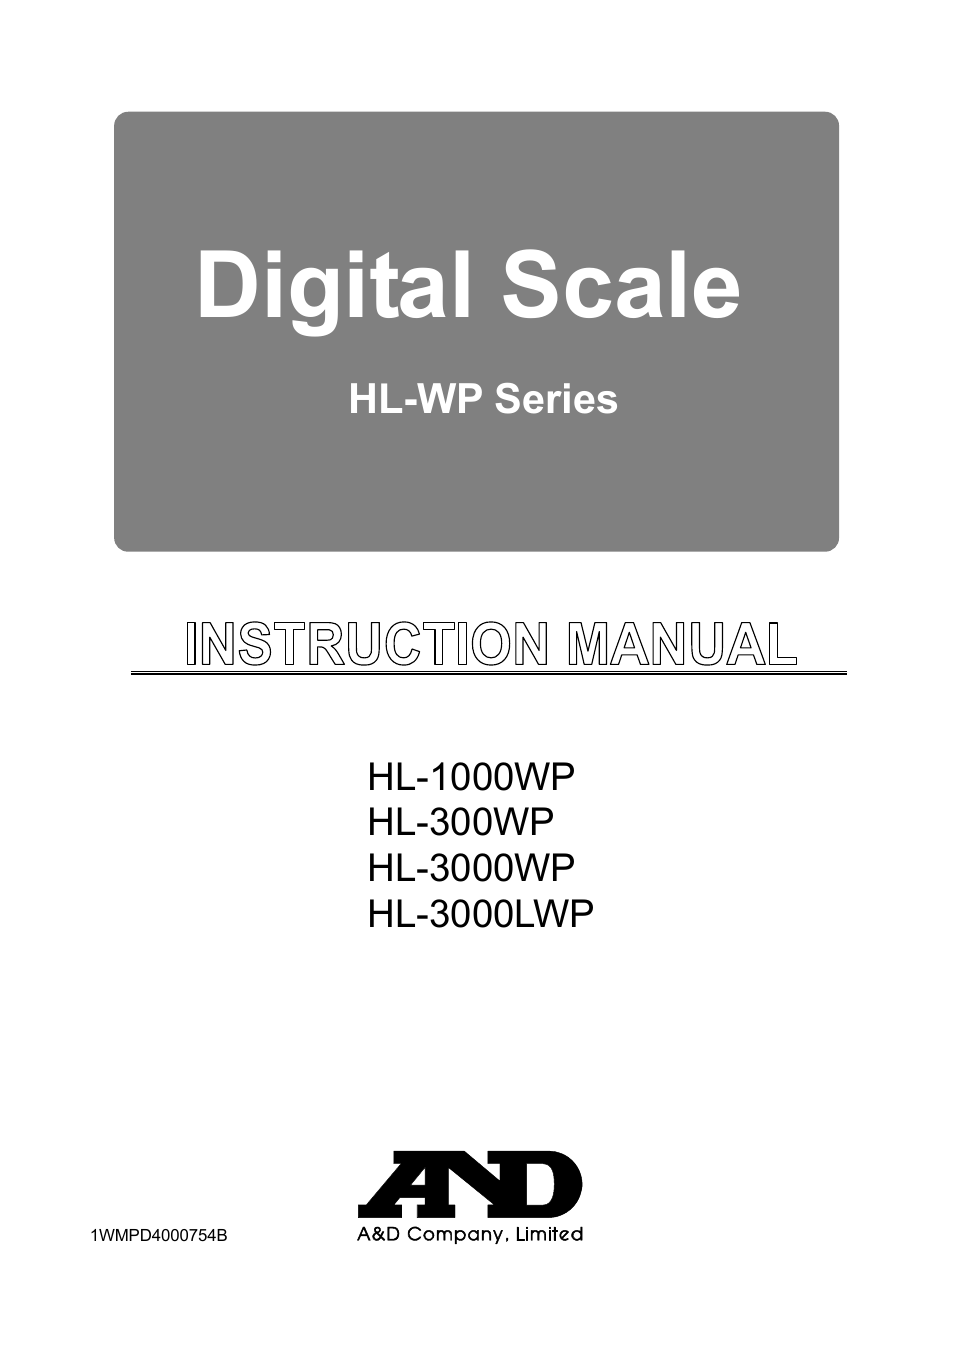 Digital Scale HL-1000WP (Page 1)